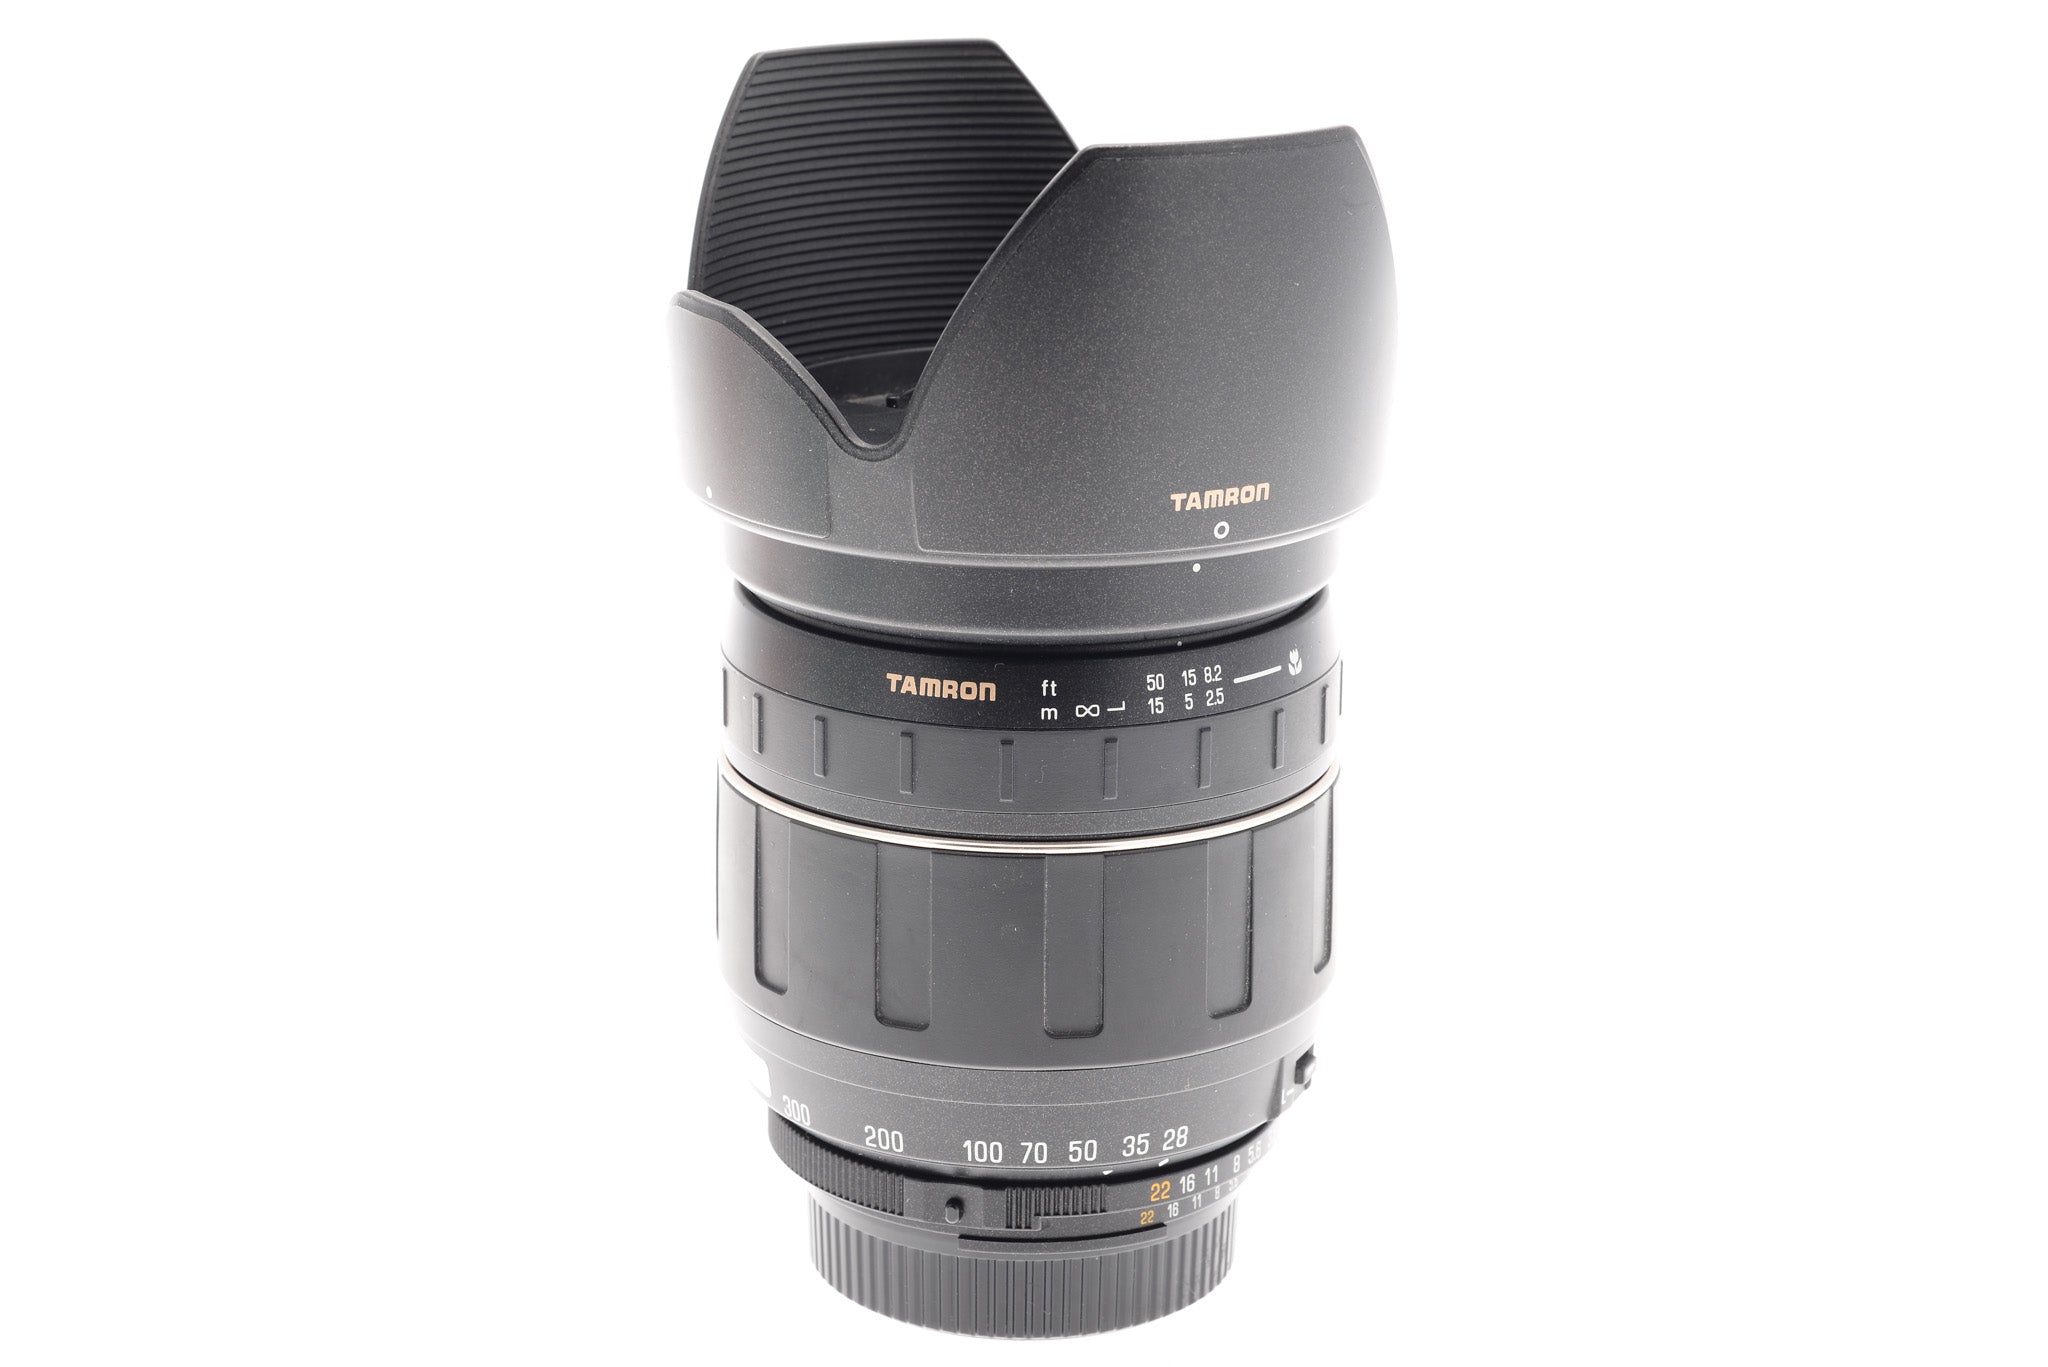 Tamron 28-300mm f3.5-6.3 AF Aspherical LD IF Macro (185D) - Lens